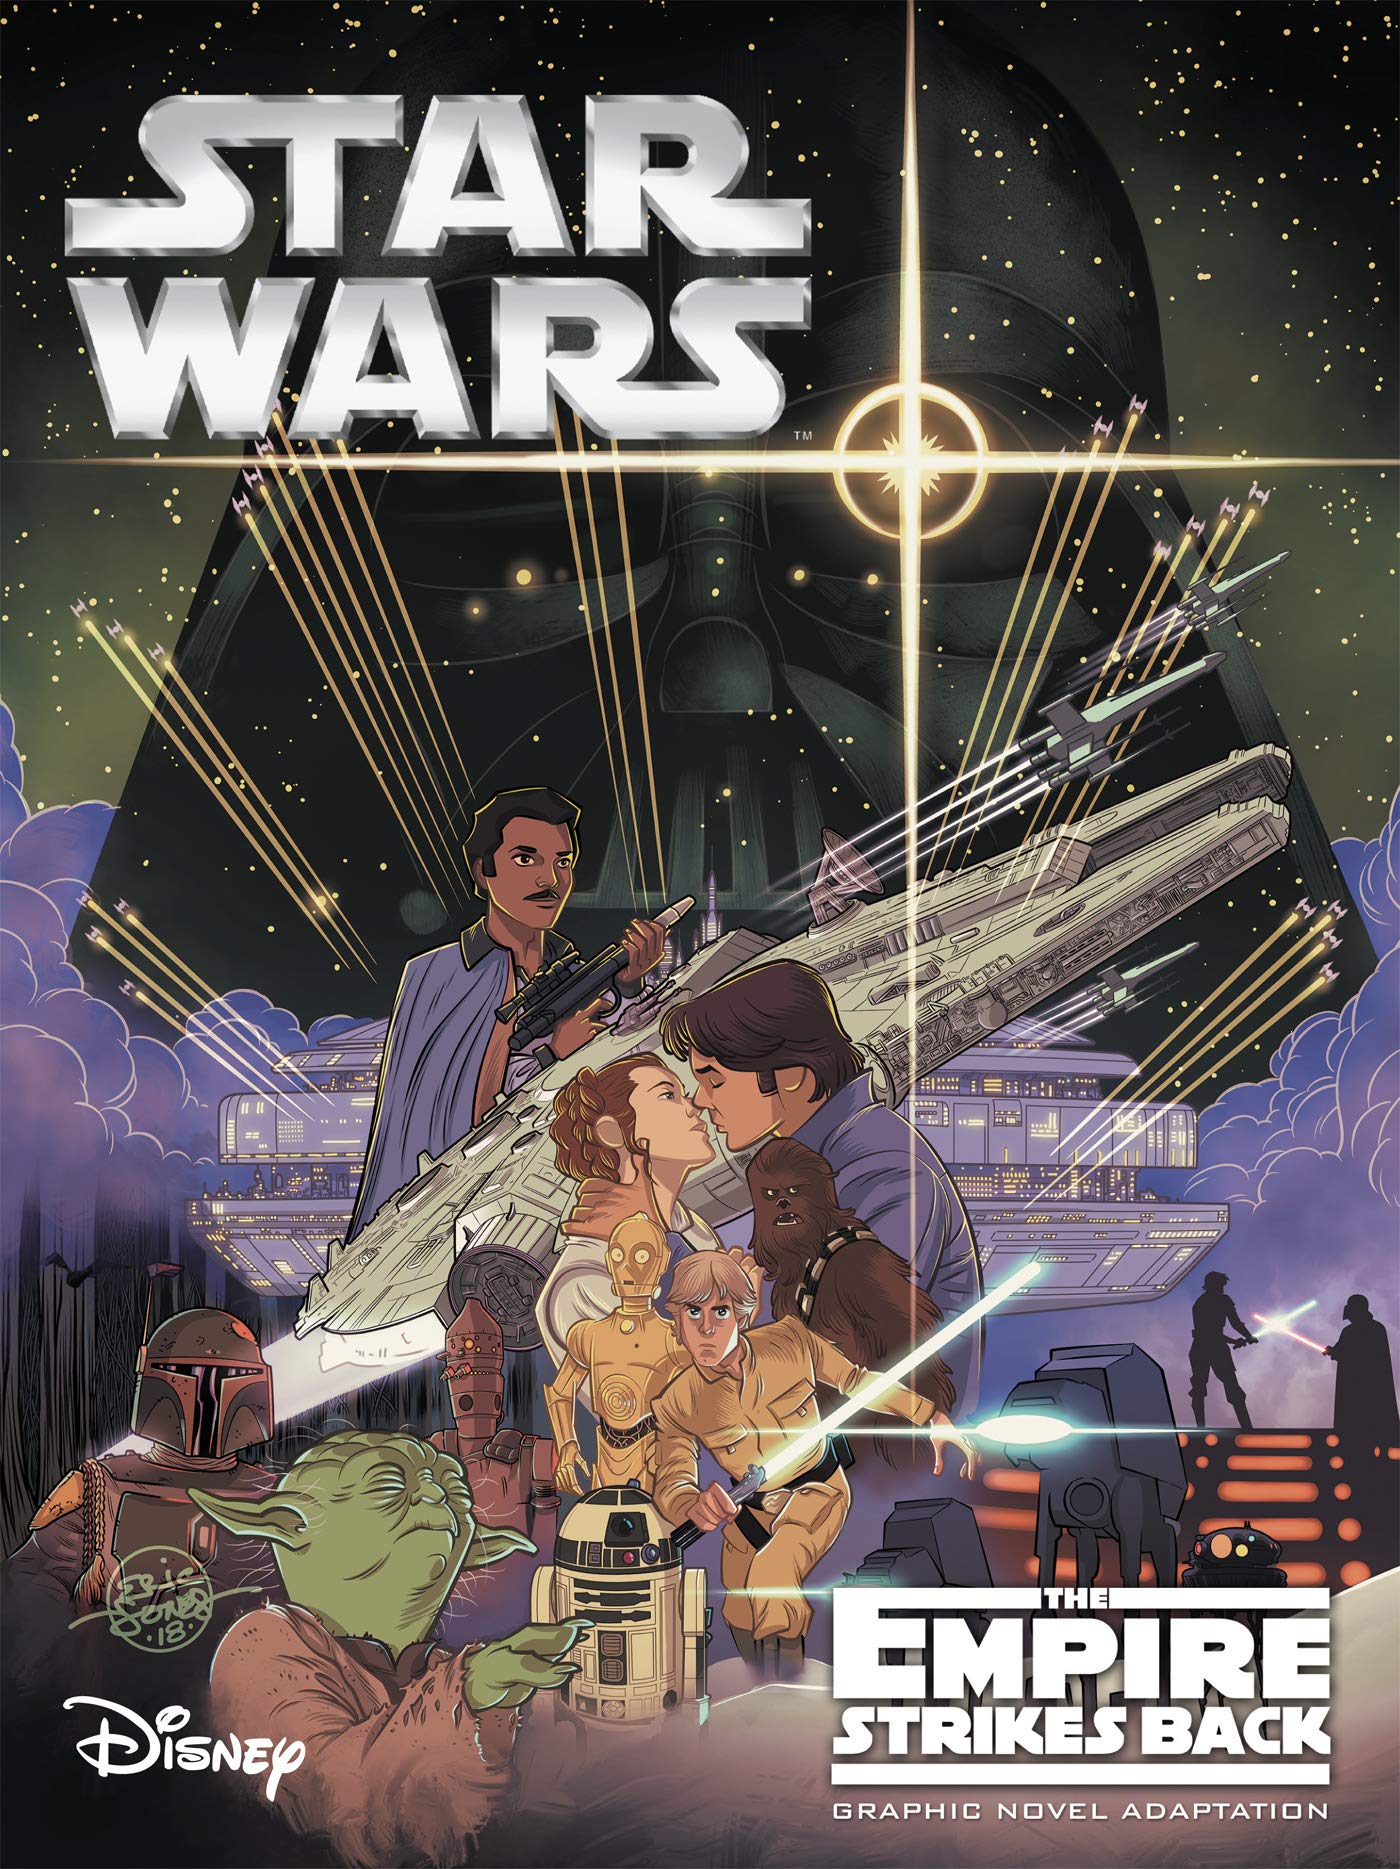 Star Wars – The Empire Strikes Back Graphic Novel Adaptation